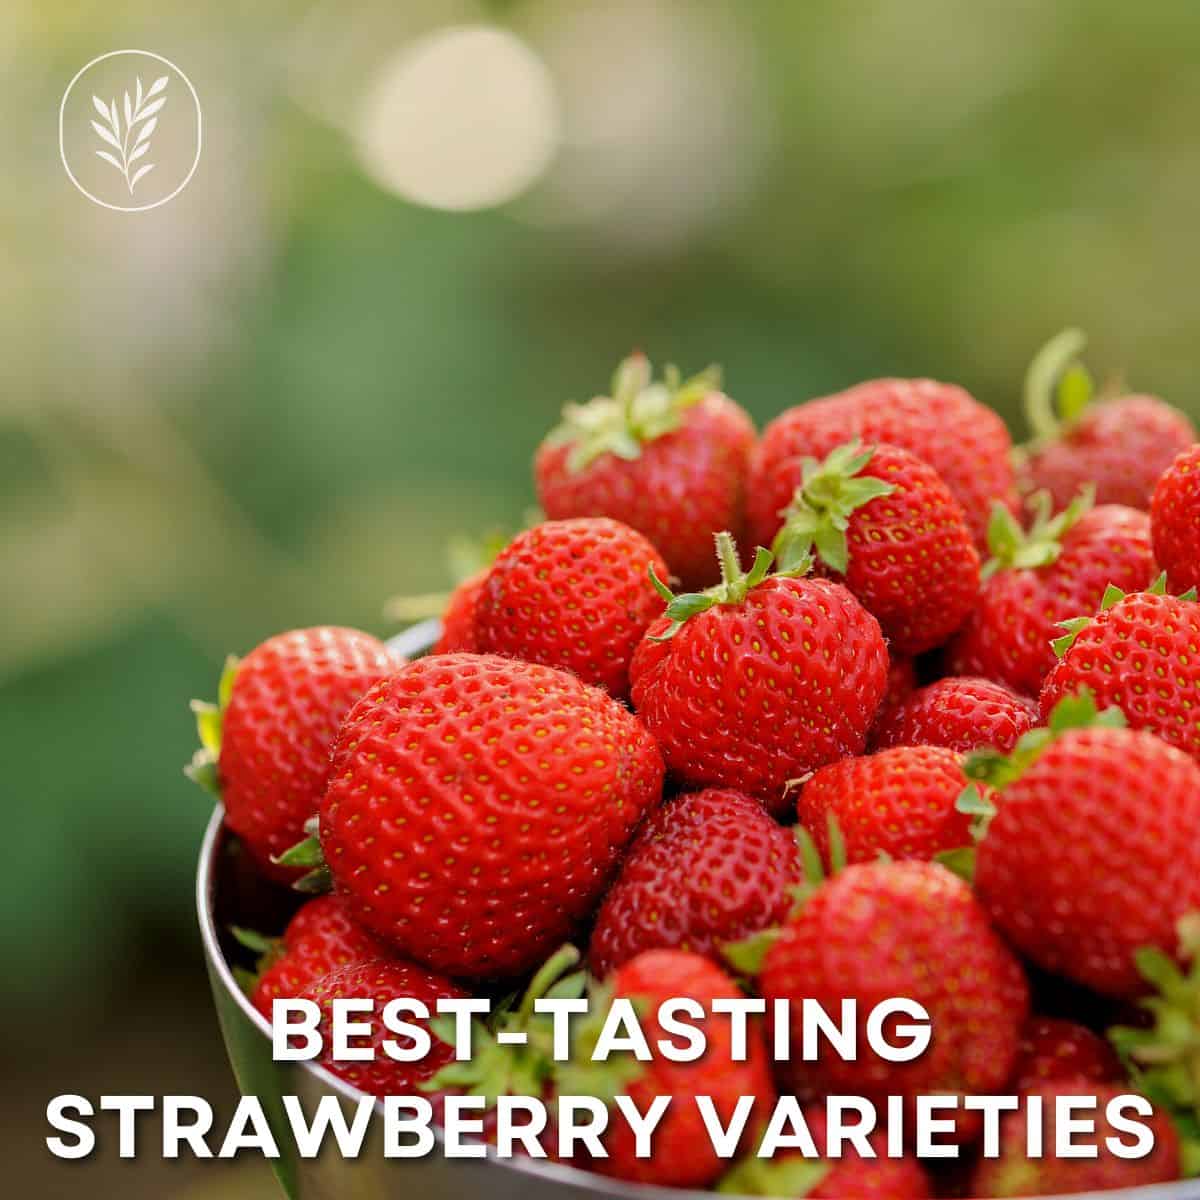 Best tasting strawberry varieties via @home4theharvest